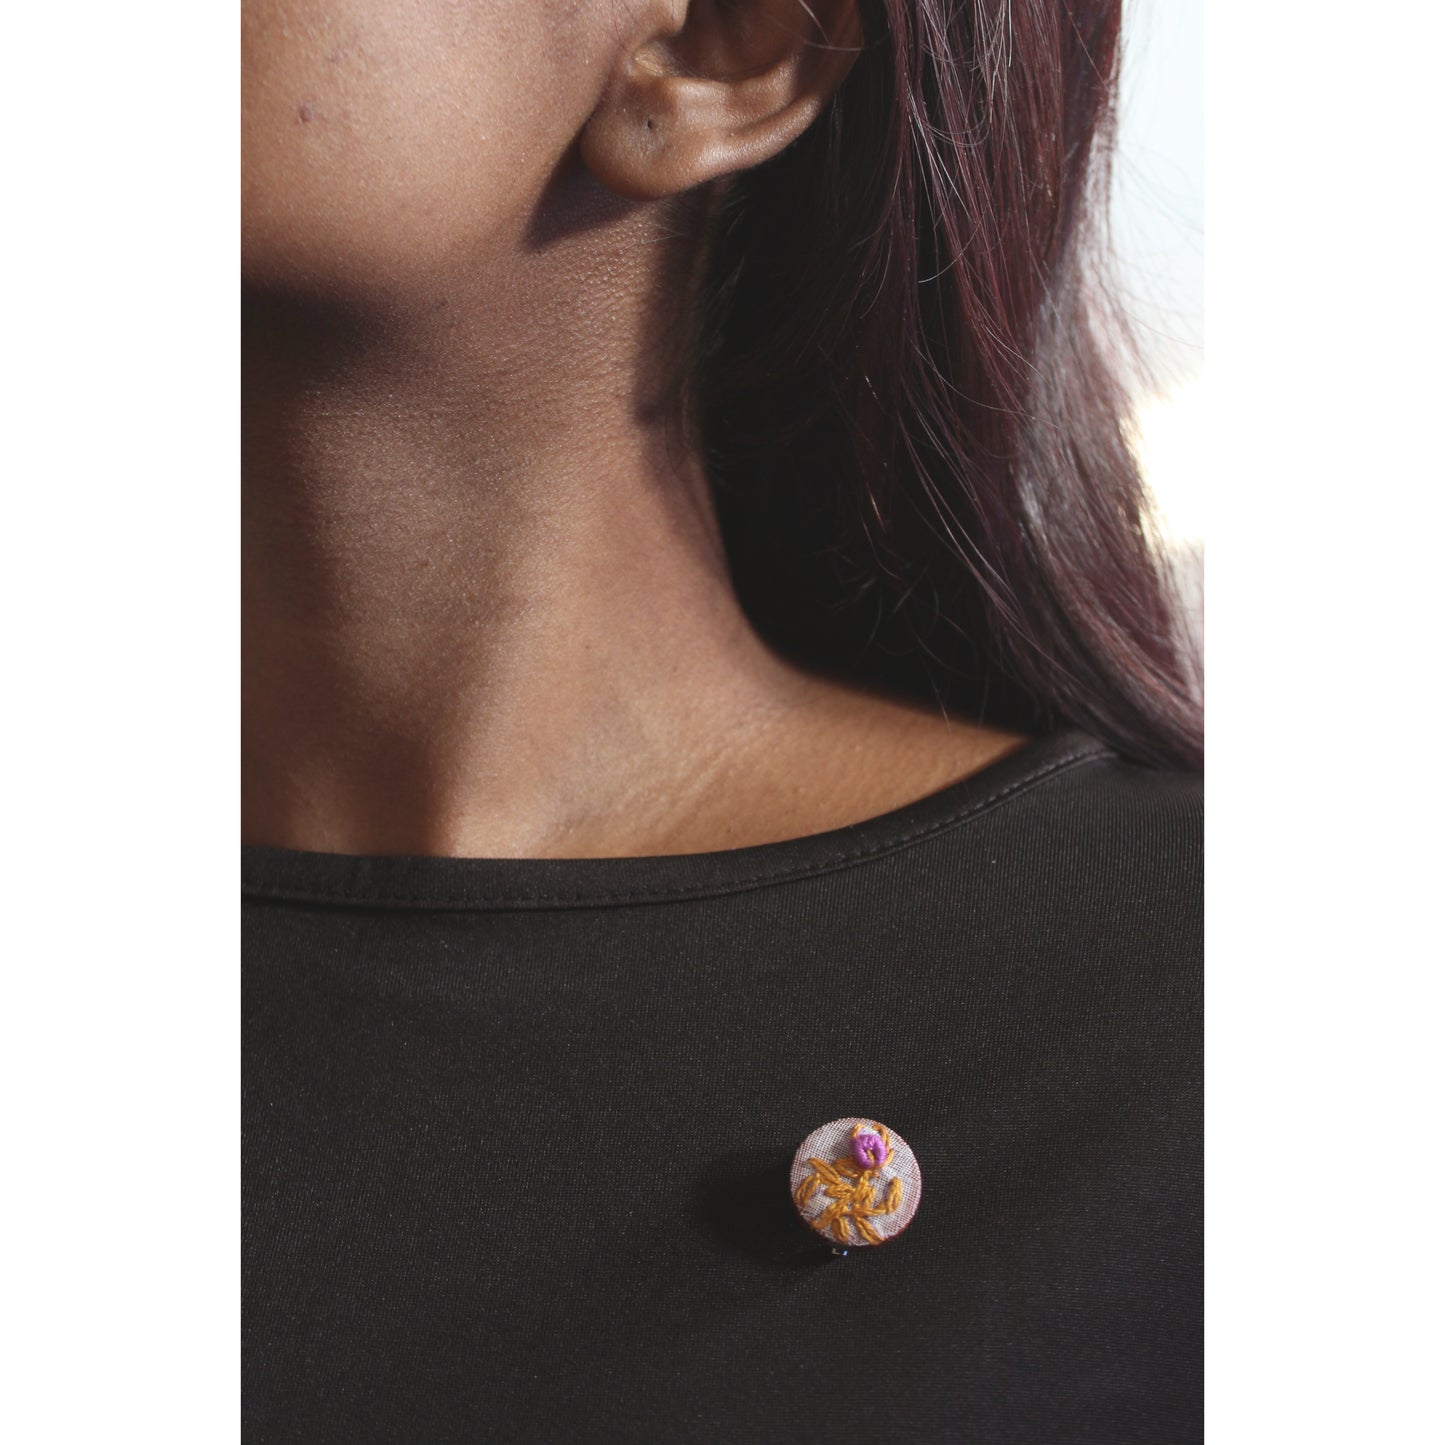 Purple Rose Bud Round Brooch Pin